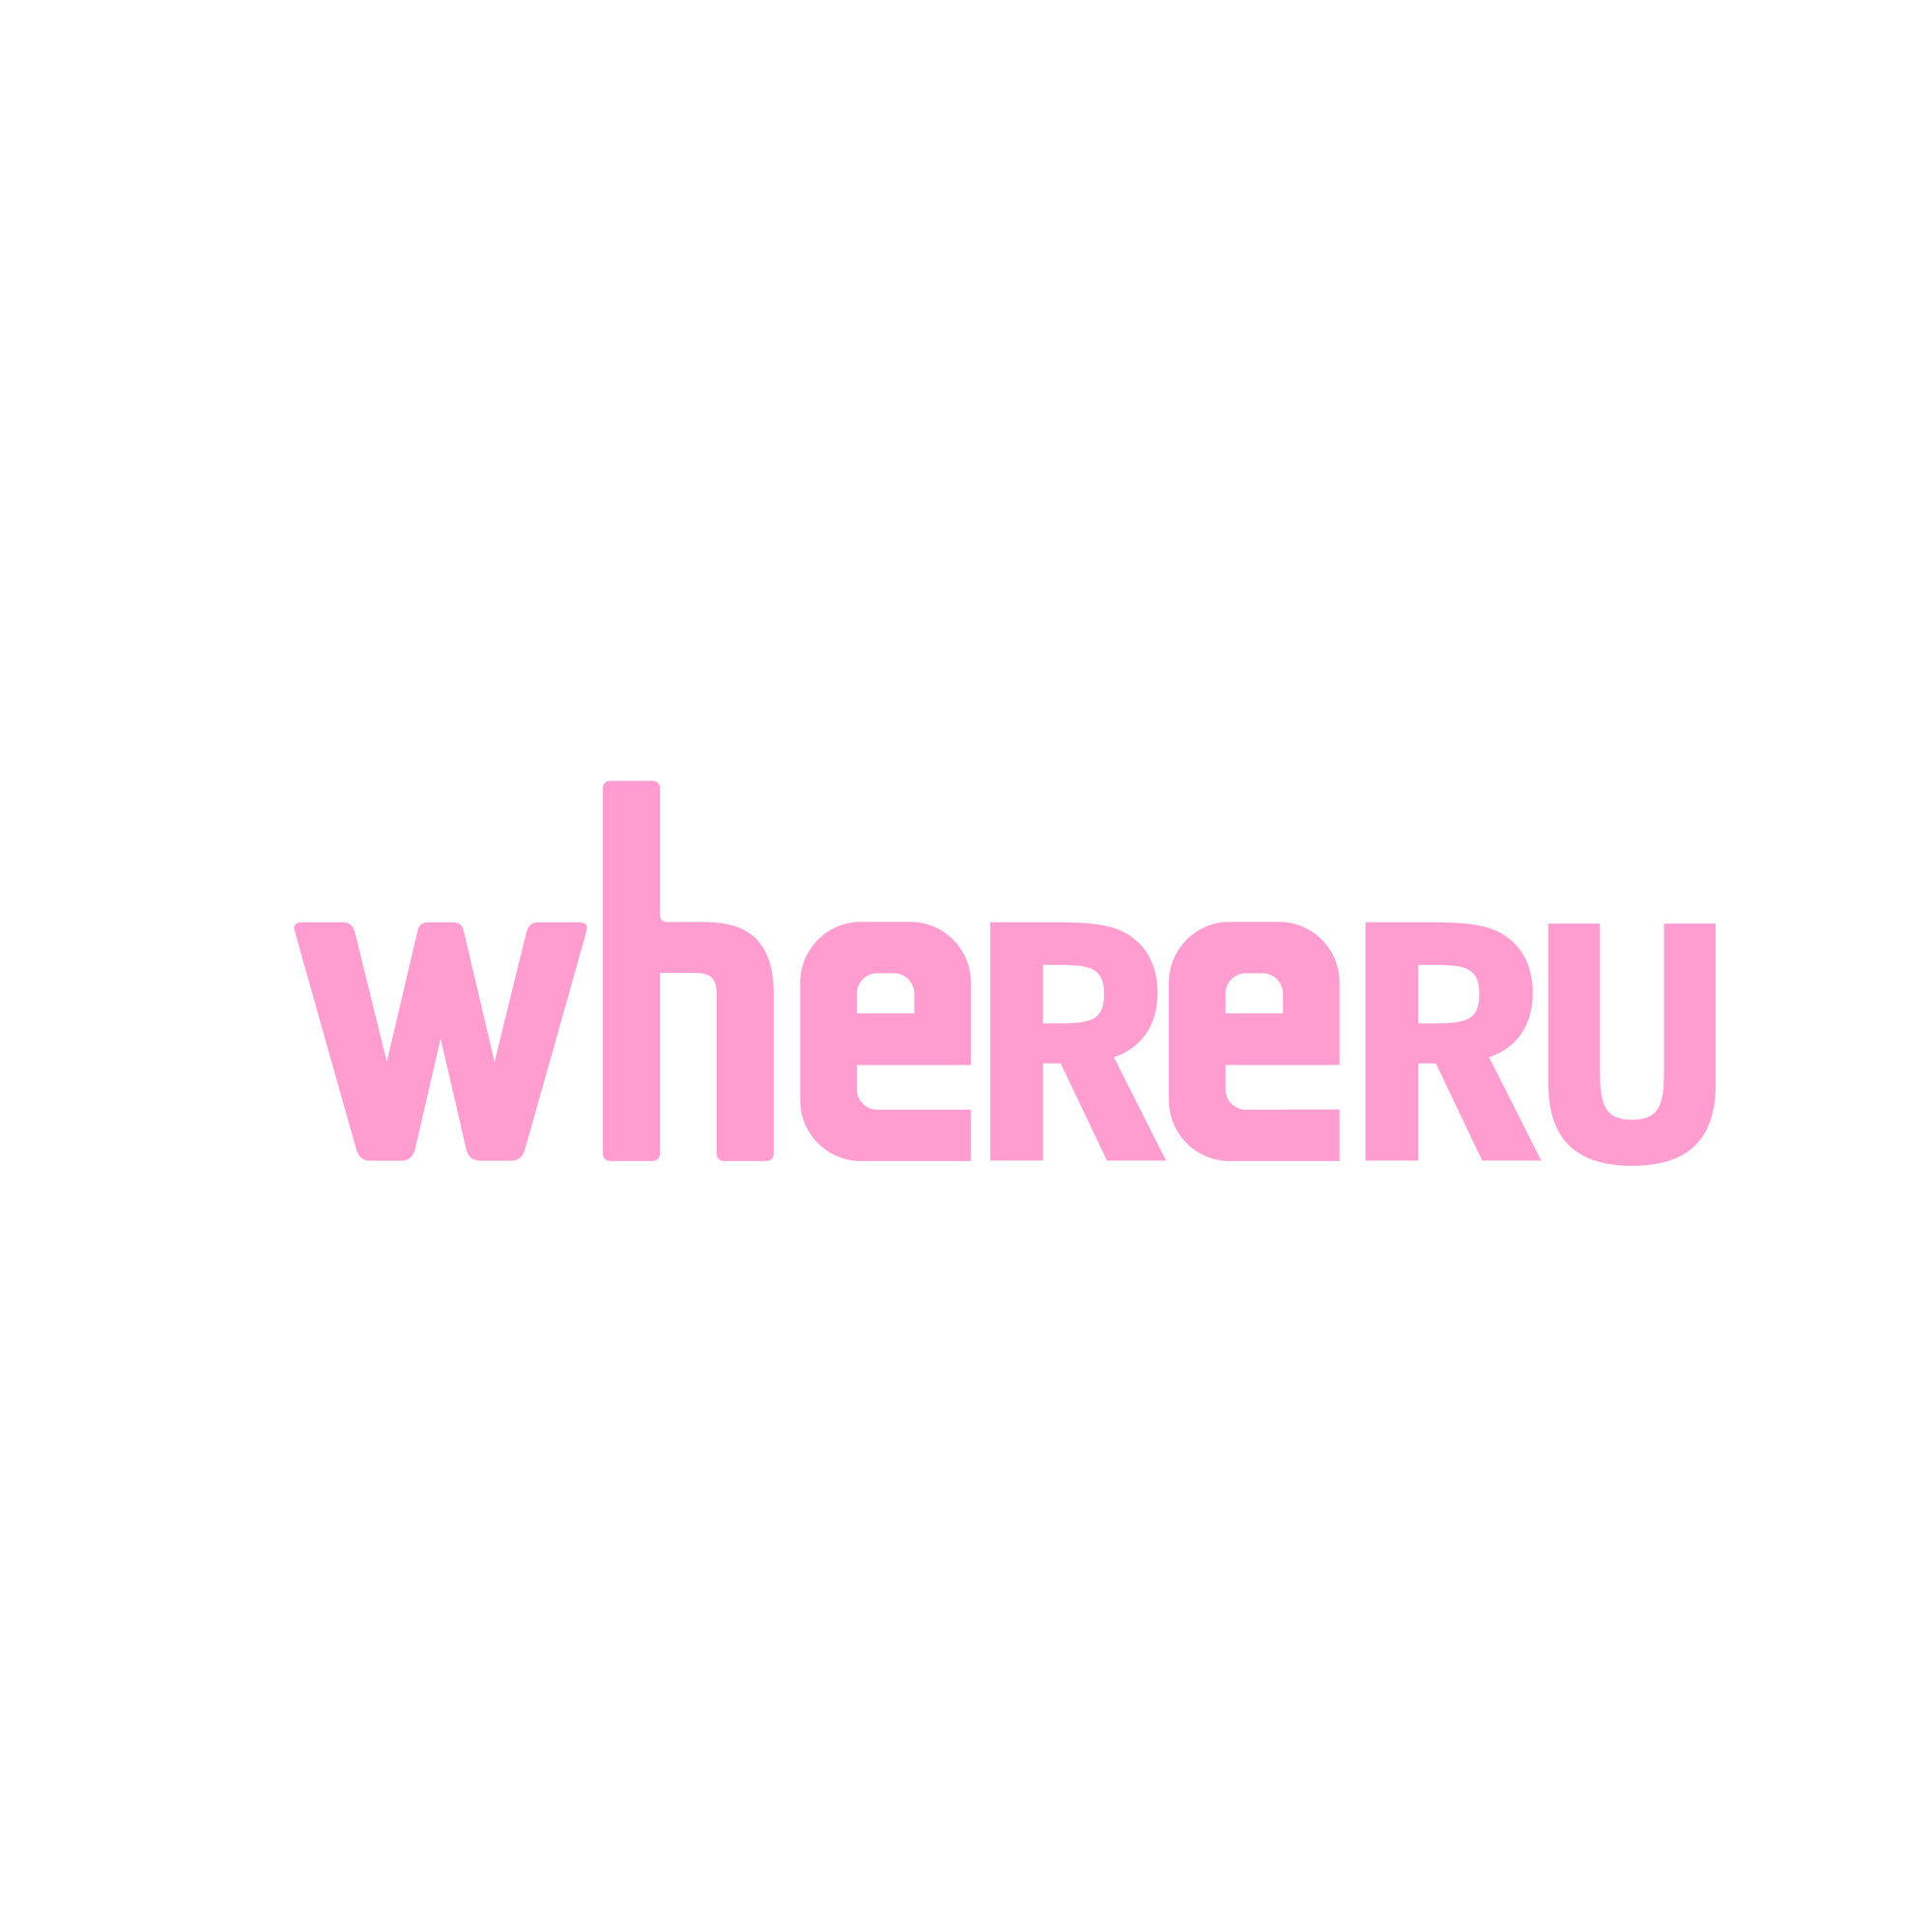 Where RU